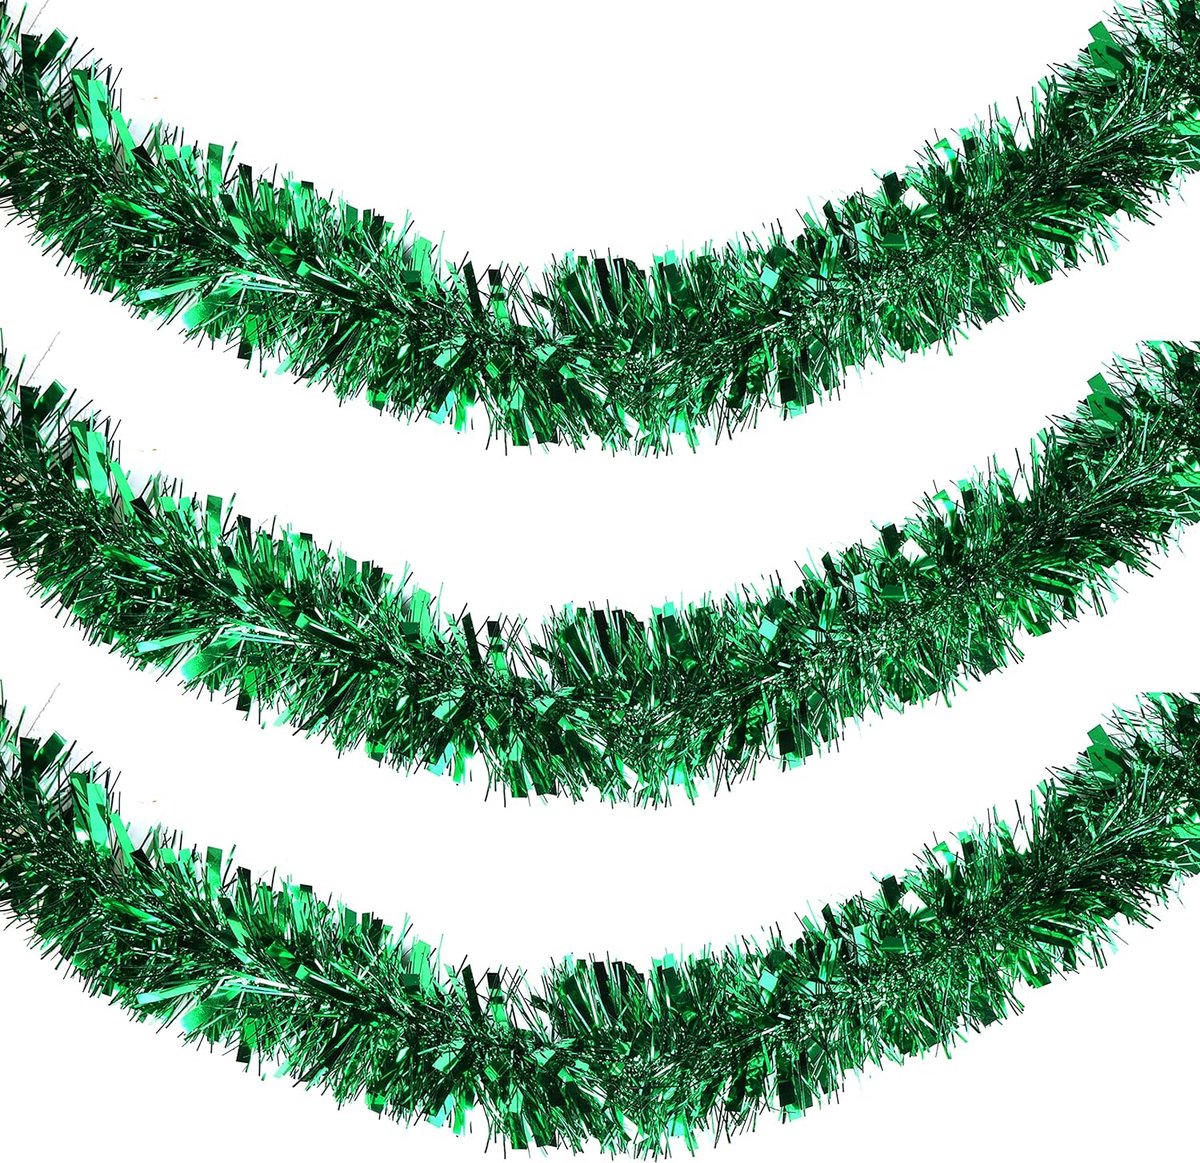 Lametta (3 stuks) - 3 m klatergoud slinger groene decoratie slinger voor kerstboom - kerstboom klatergoud slinger Kerstmis voor muur, raam, krans, balustrade, plafond, feestslinger